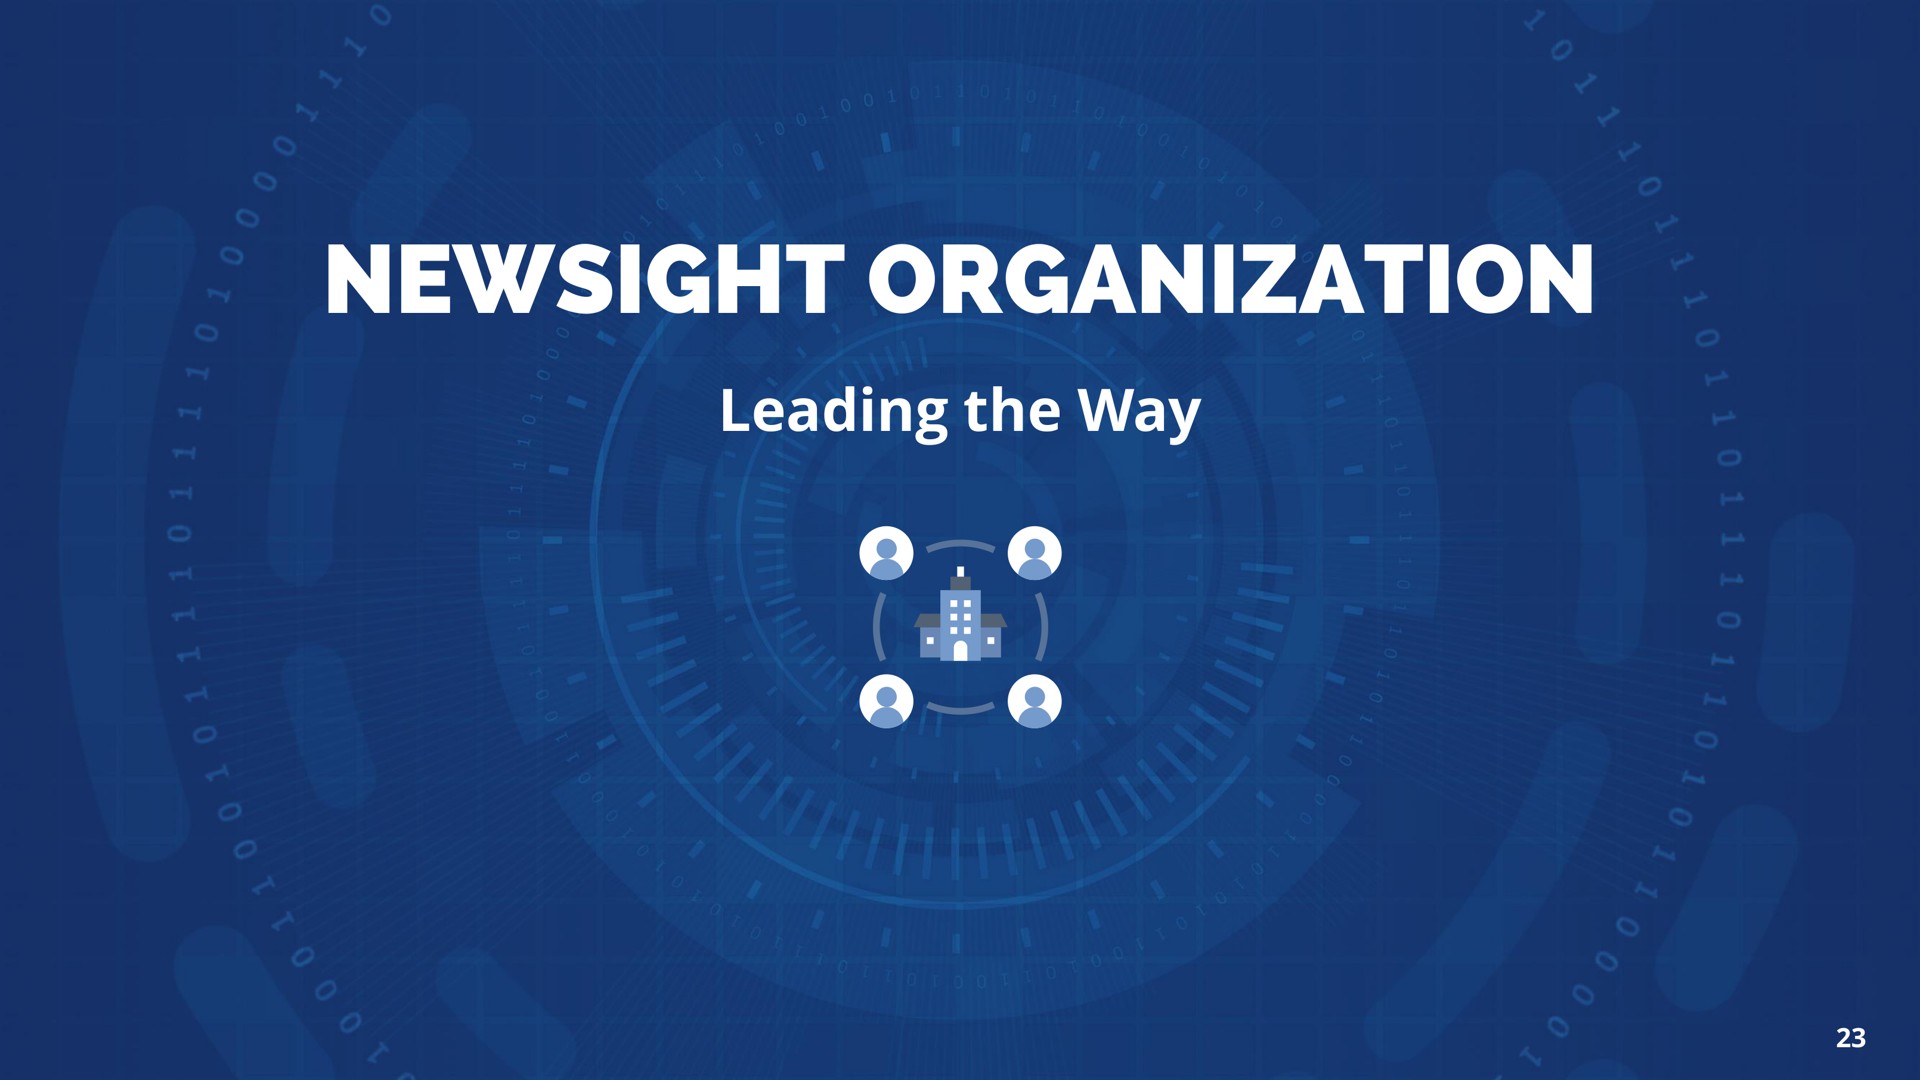 organization leading the way | Newsight Imaging